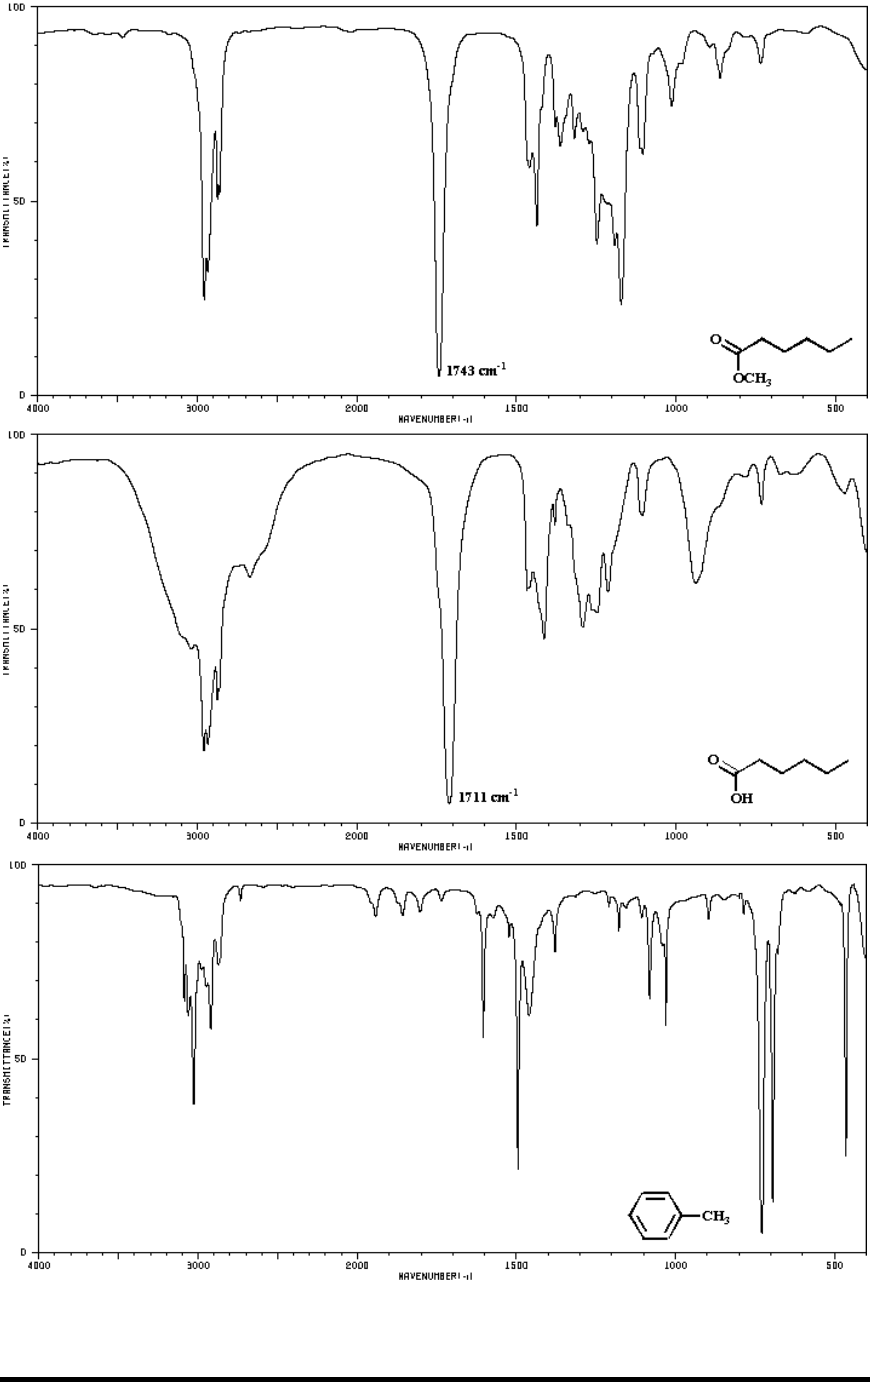 IR Spectroscopy Chart 1